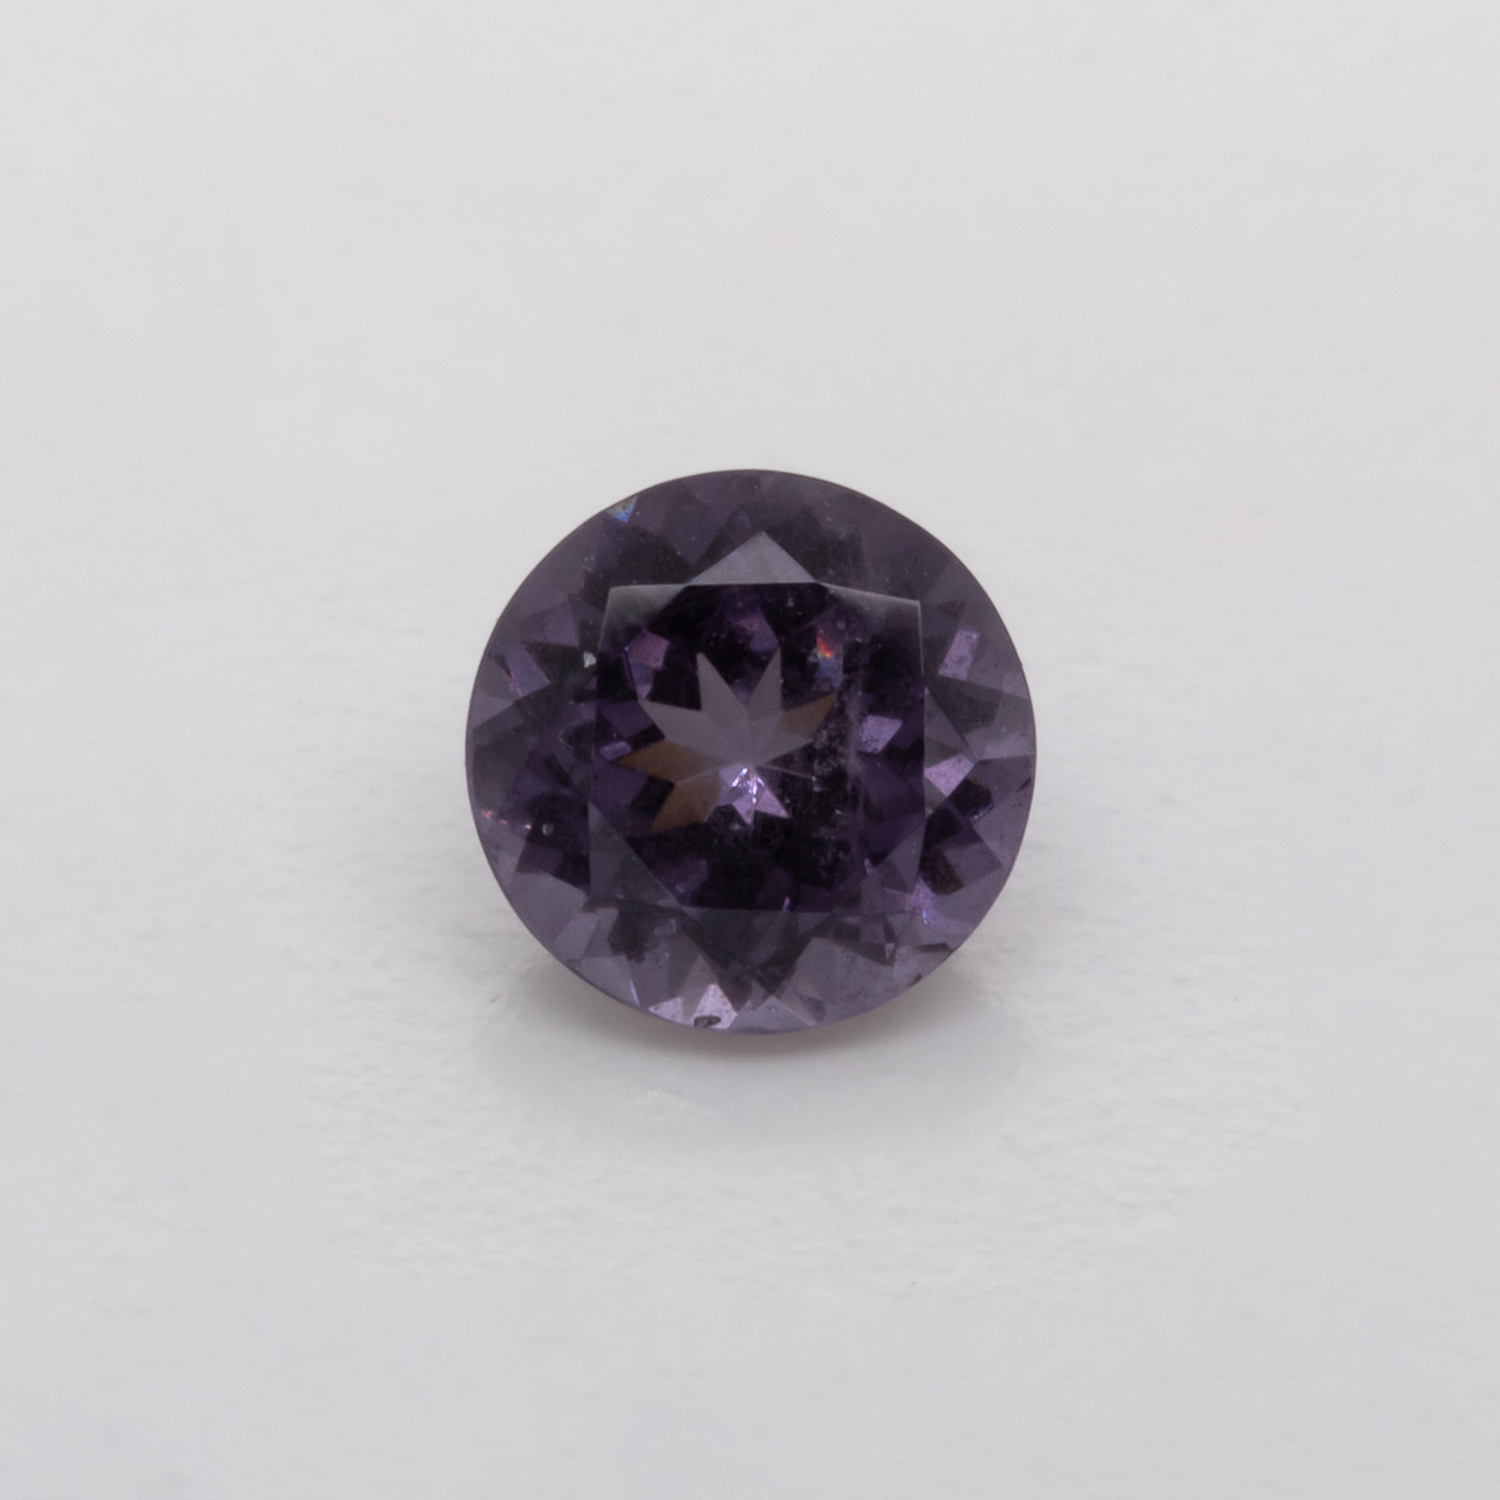 Spinel - purple, round, 5.1x5.1 mm, 0.55 cts, No. SP90015